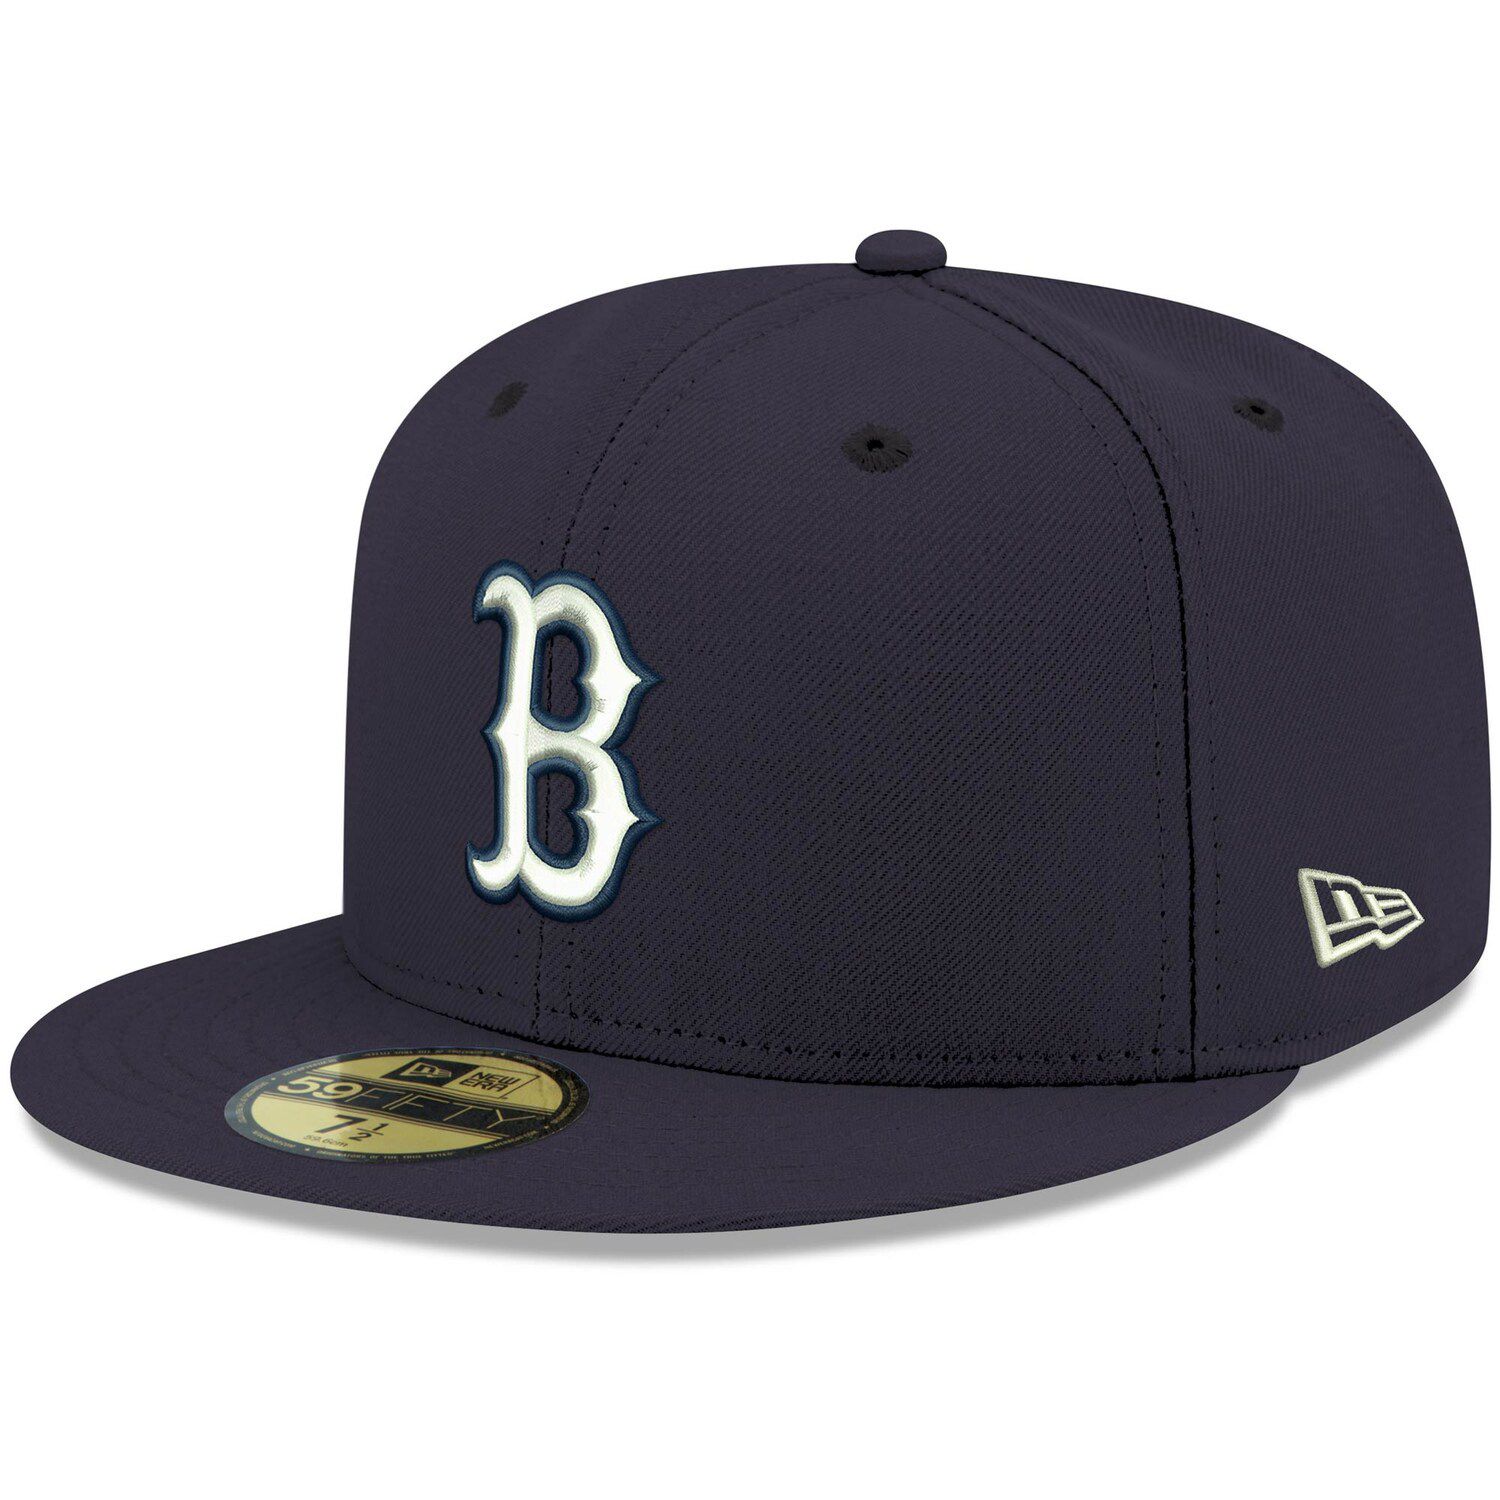 Kohls Baseball Cap | Curved Brim With